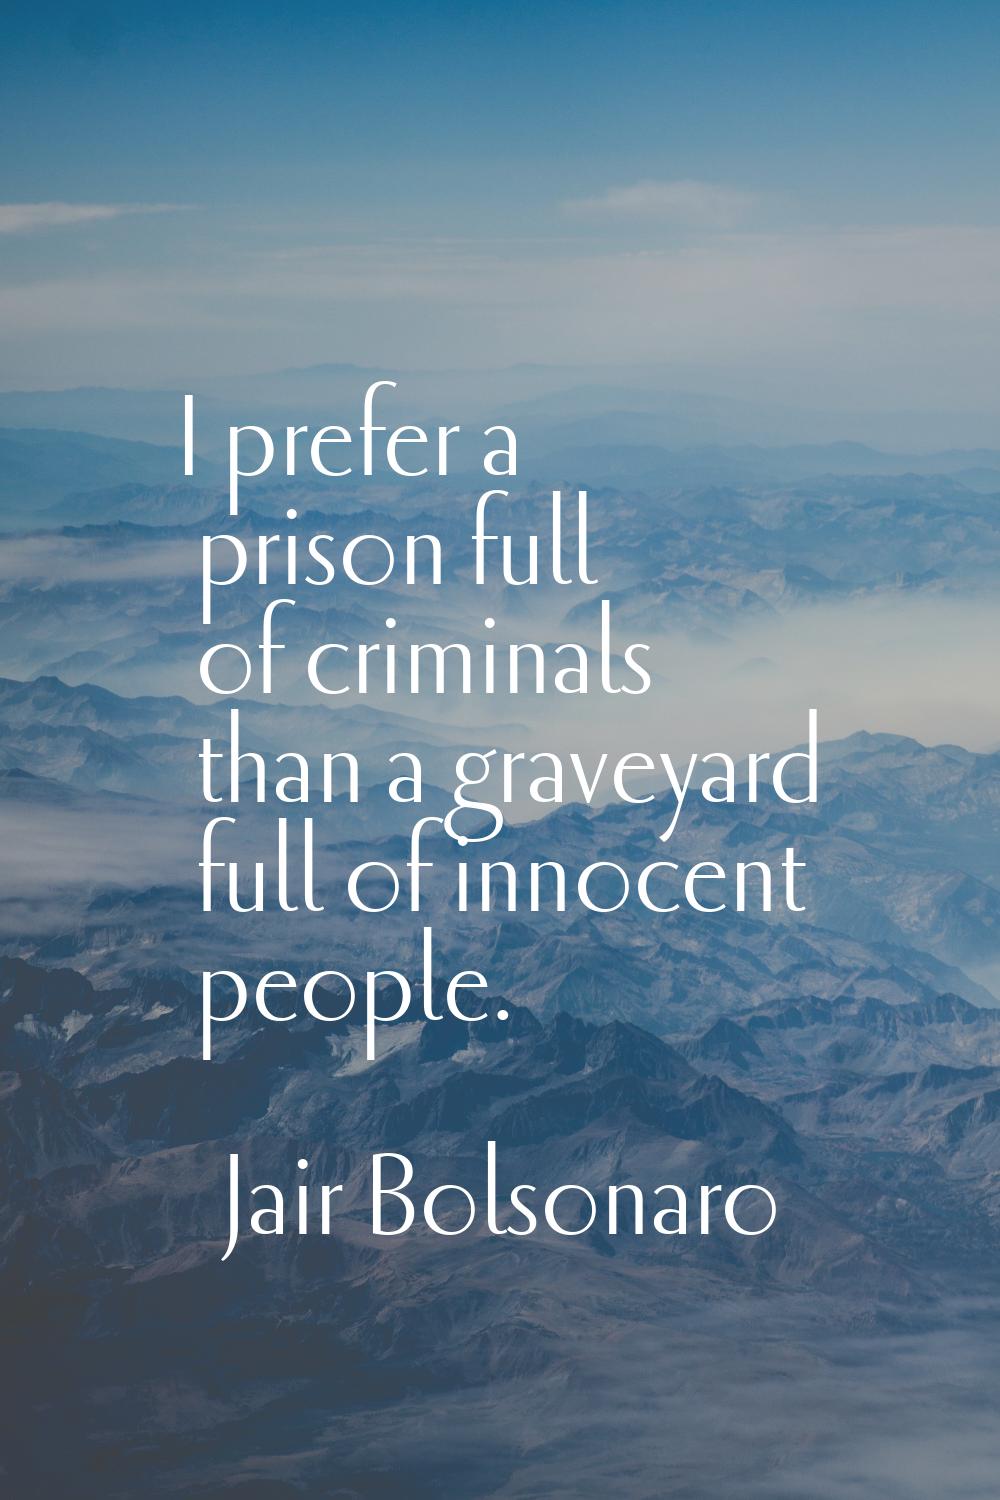 I prefer a prison full of criminals than a graveyard full of innocent people.